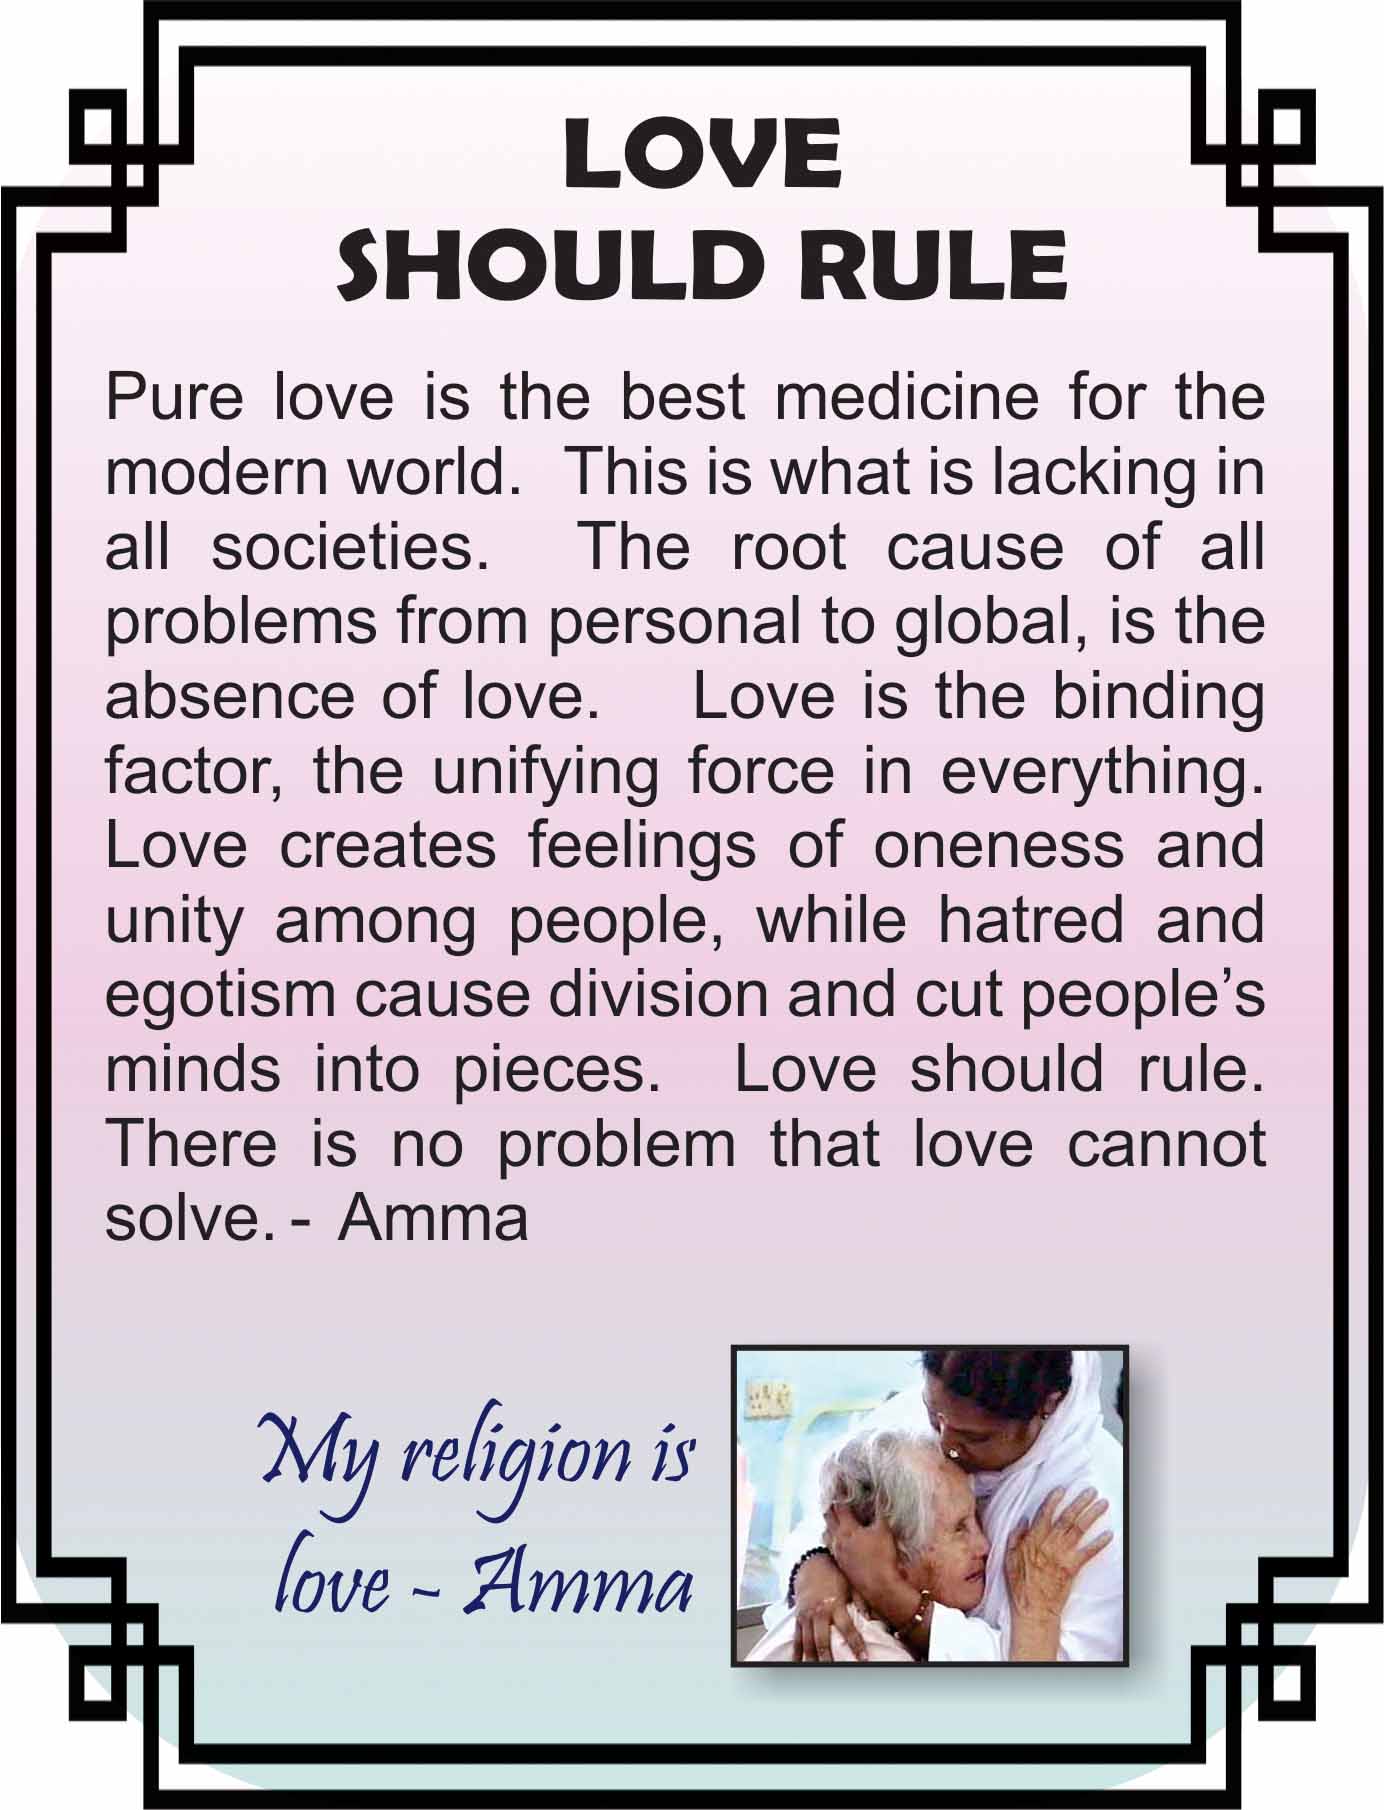 Love should rule